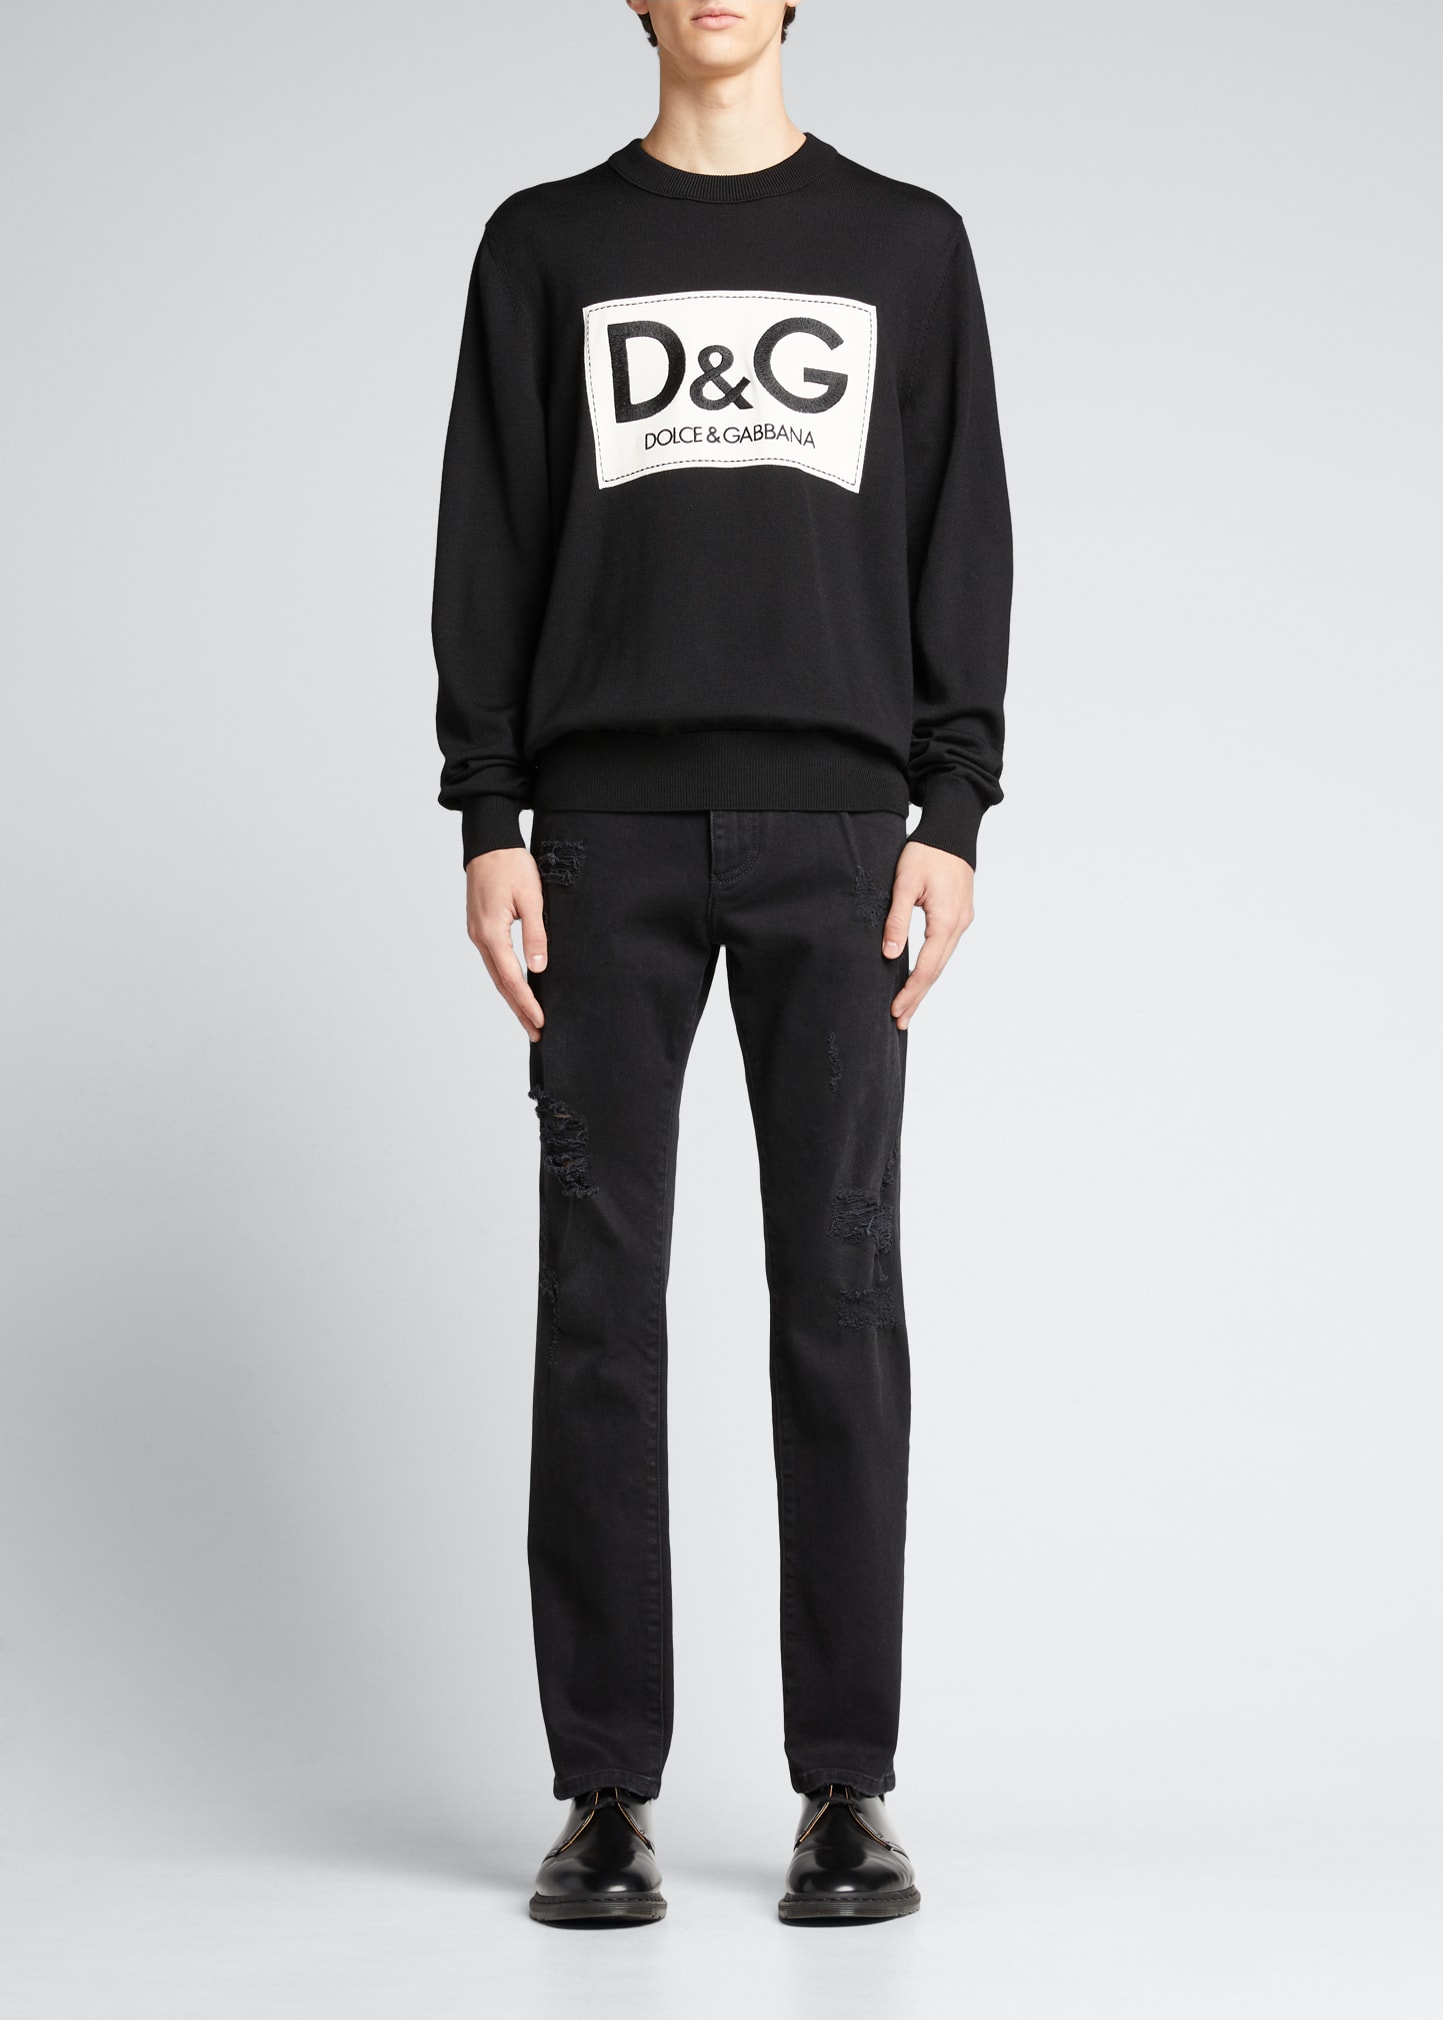 Dolce & Gabbana Men's Wool Logo Sweater